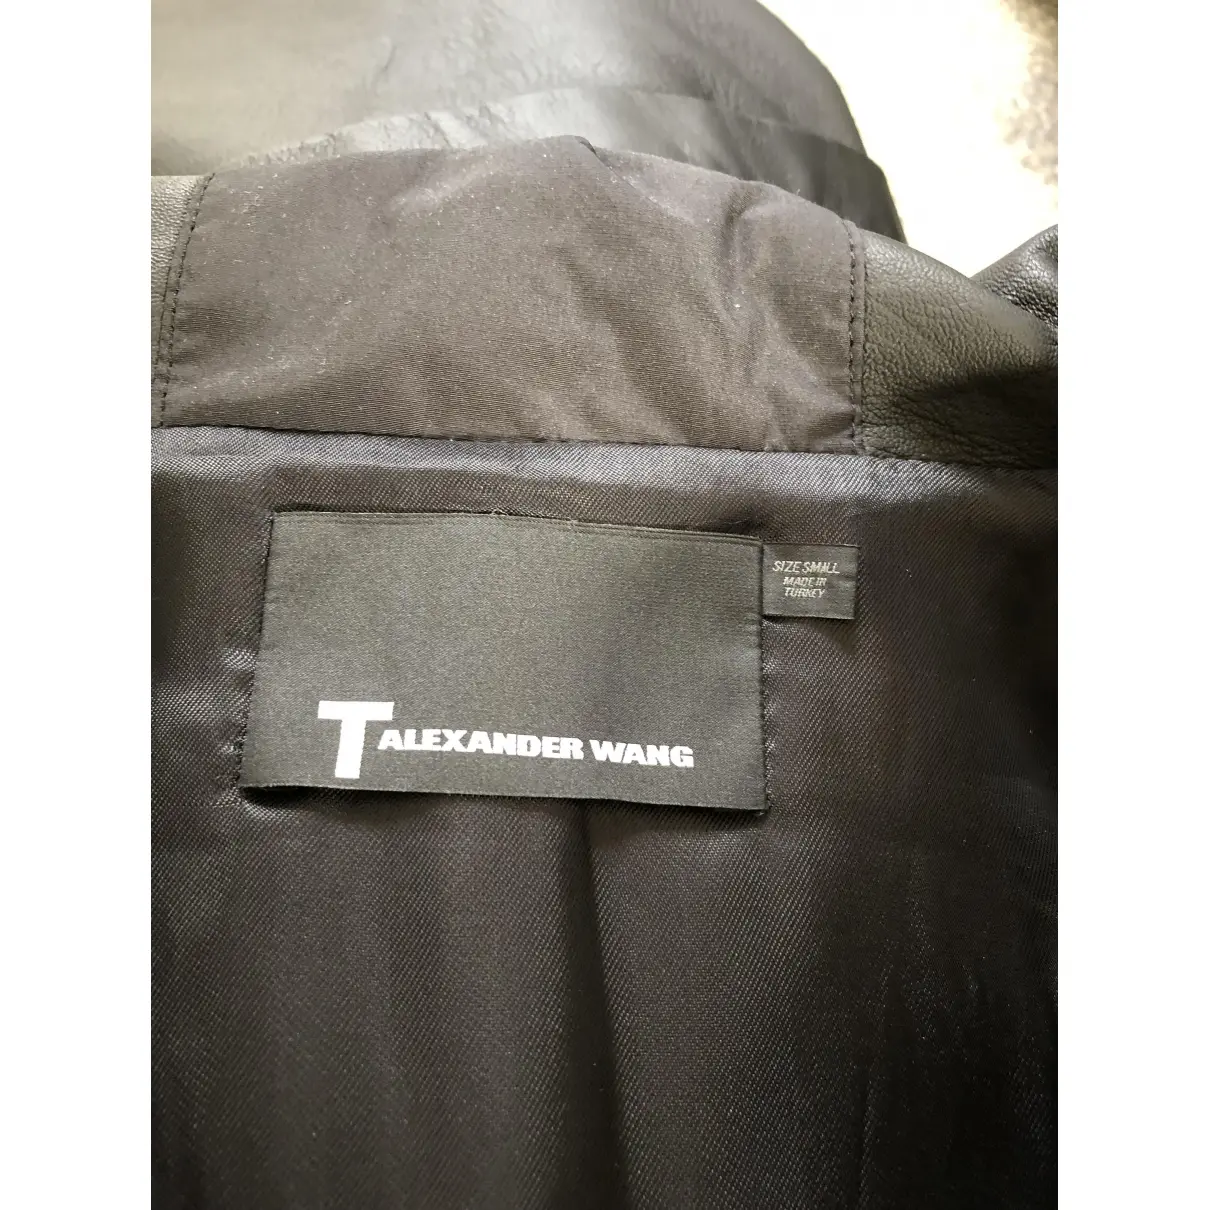 Buy Alexander Wang Leather jacket online